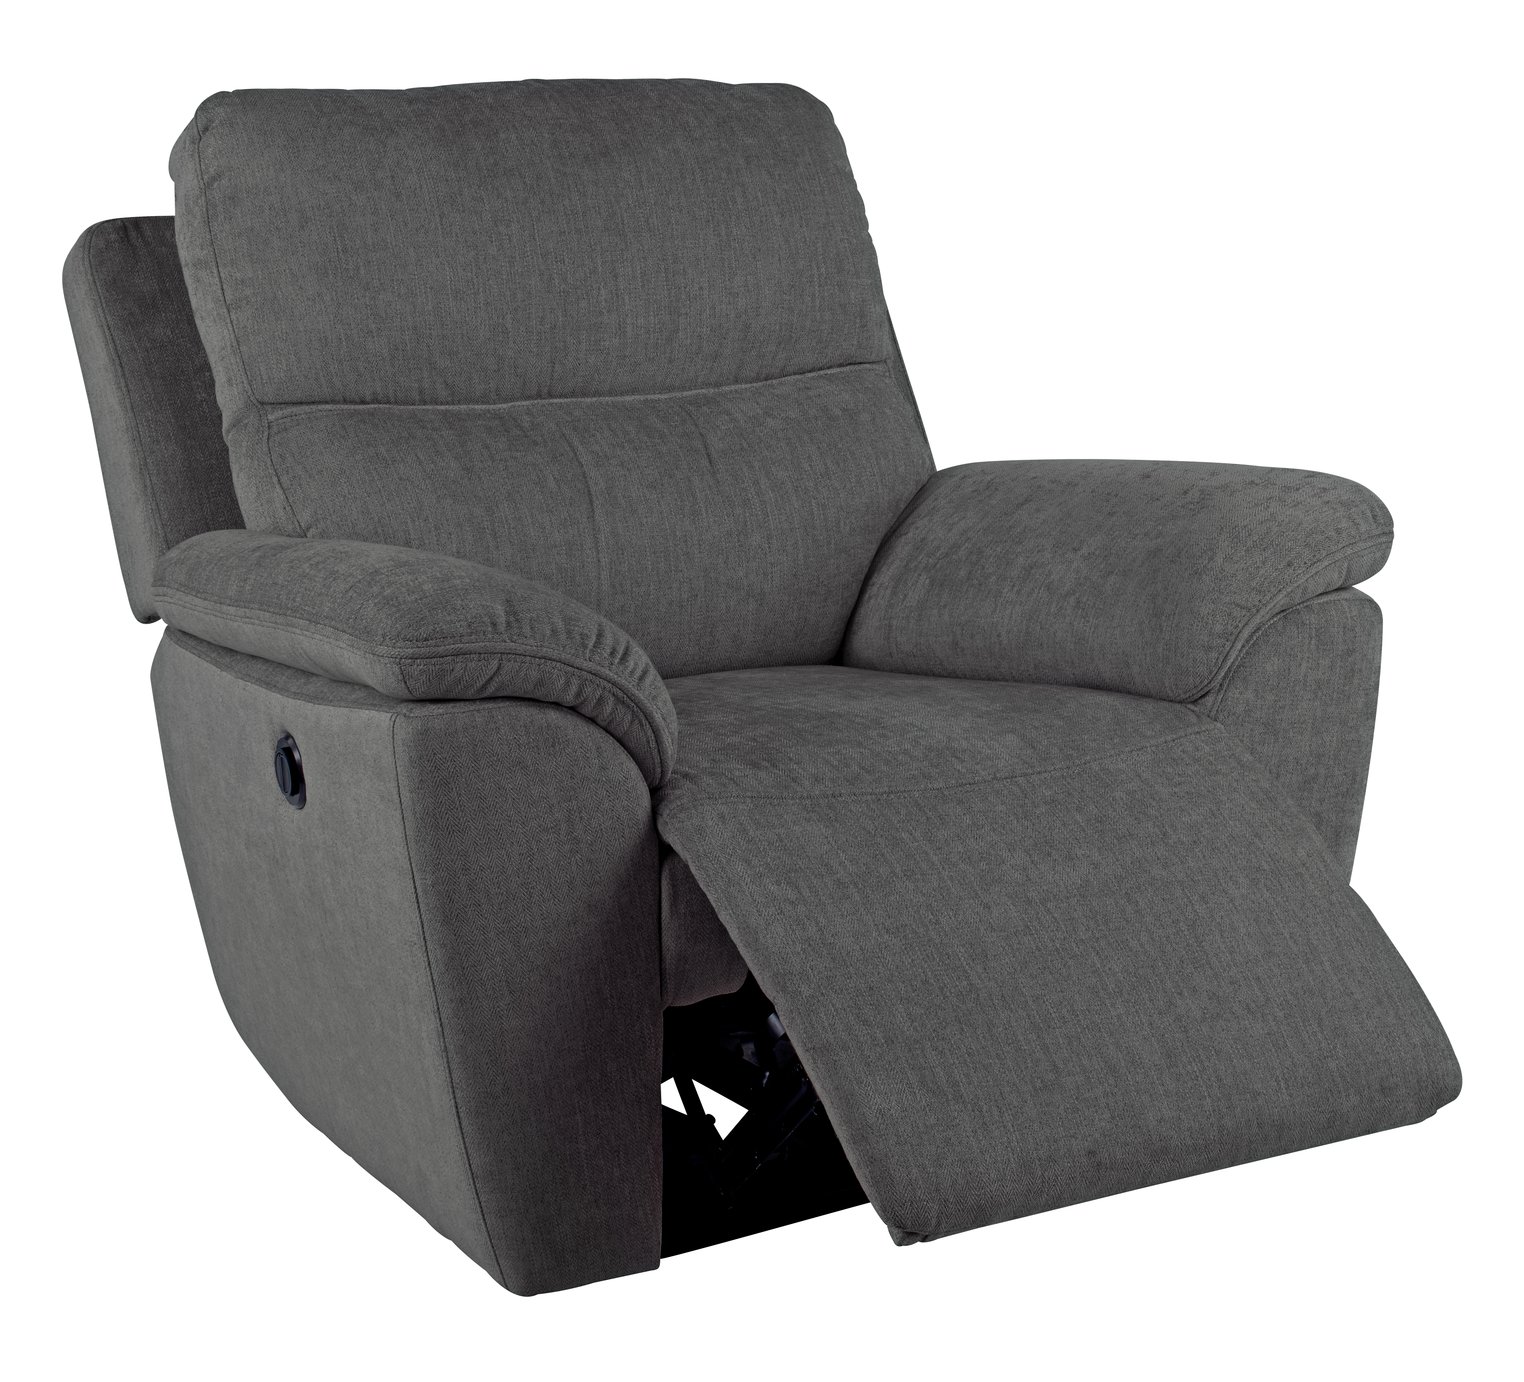 Argos Home Sandy Fabric Power Recliner Chair - Charcoal